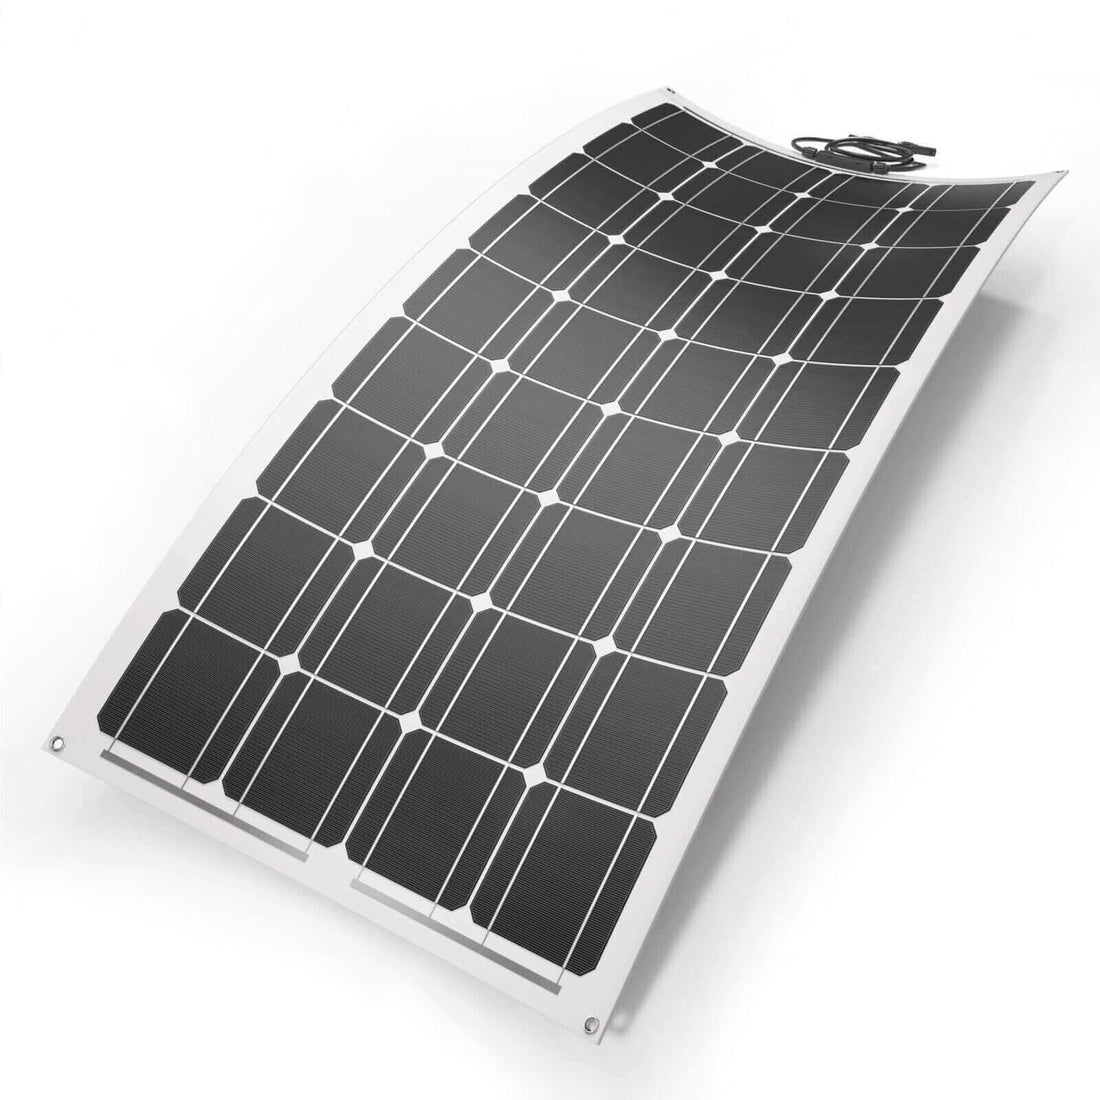 The Benefits of Flexible Solar Panels